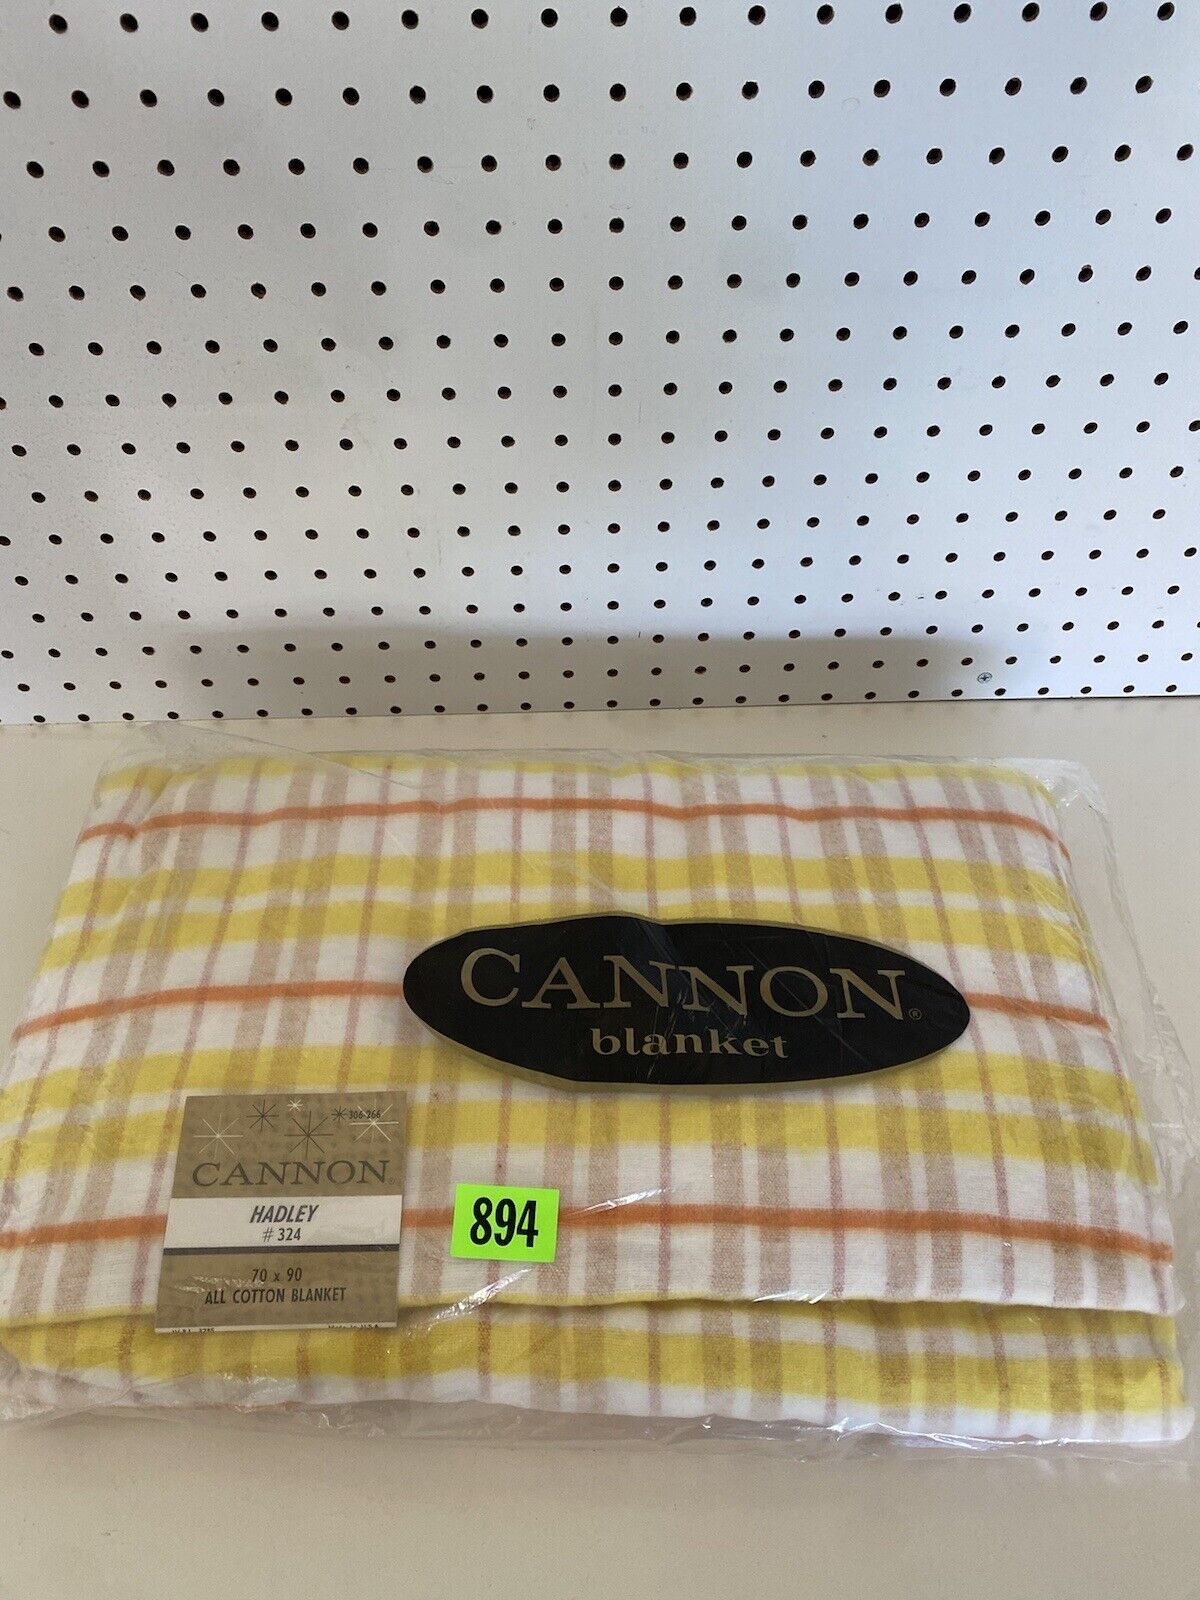 NOS Vintage Cannon Hadley Blanket In Original Bag Sealed All Cotton 70 X 90